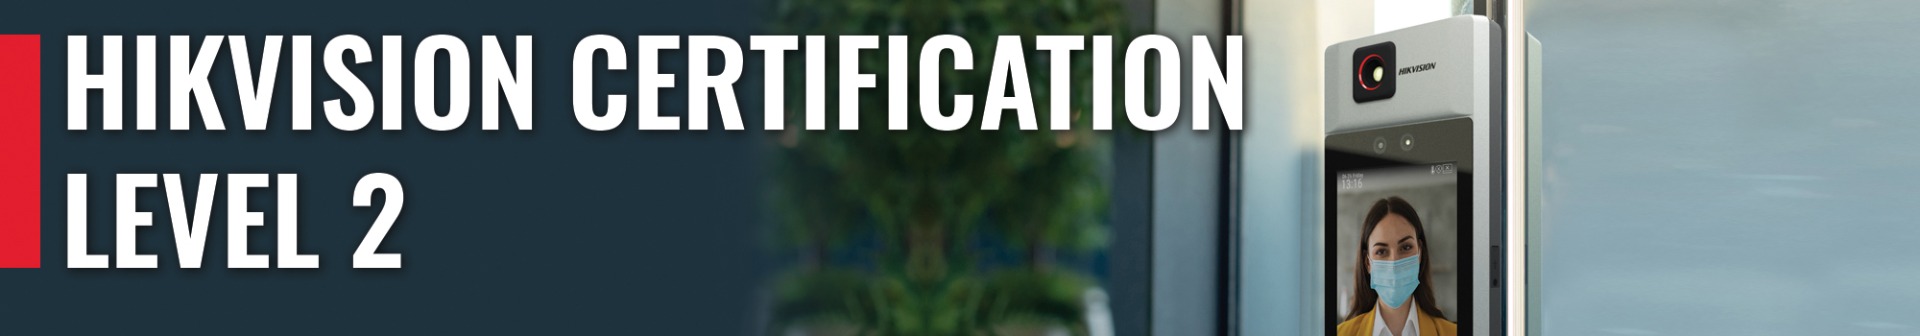 certification-level-2-banner